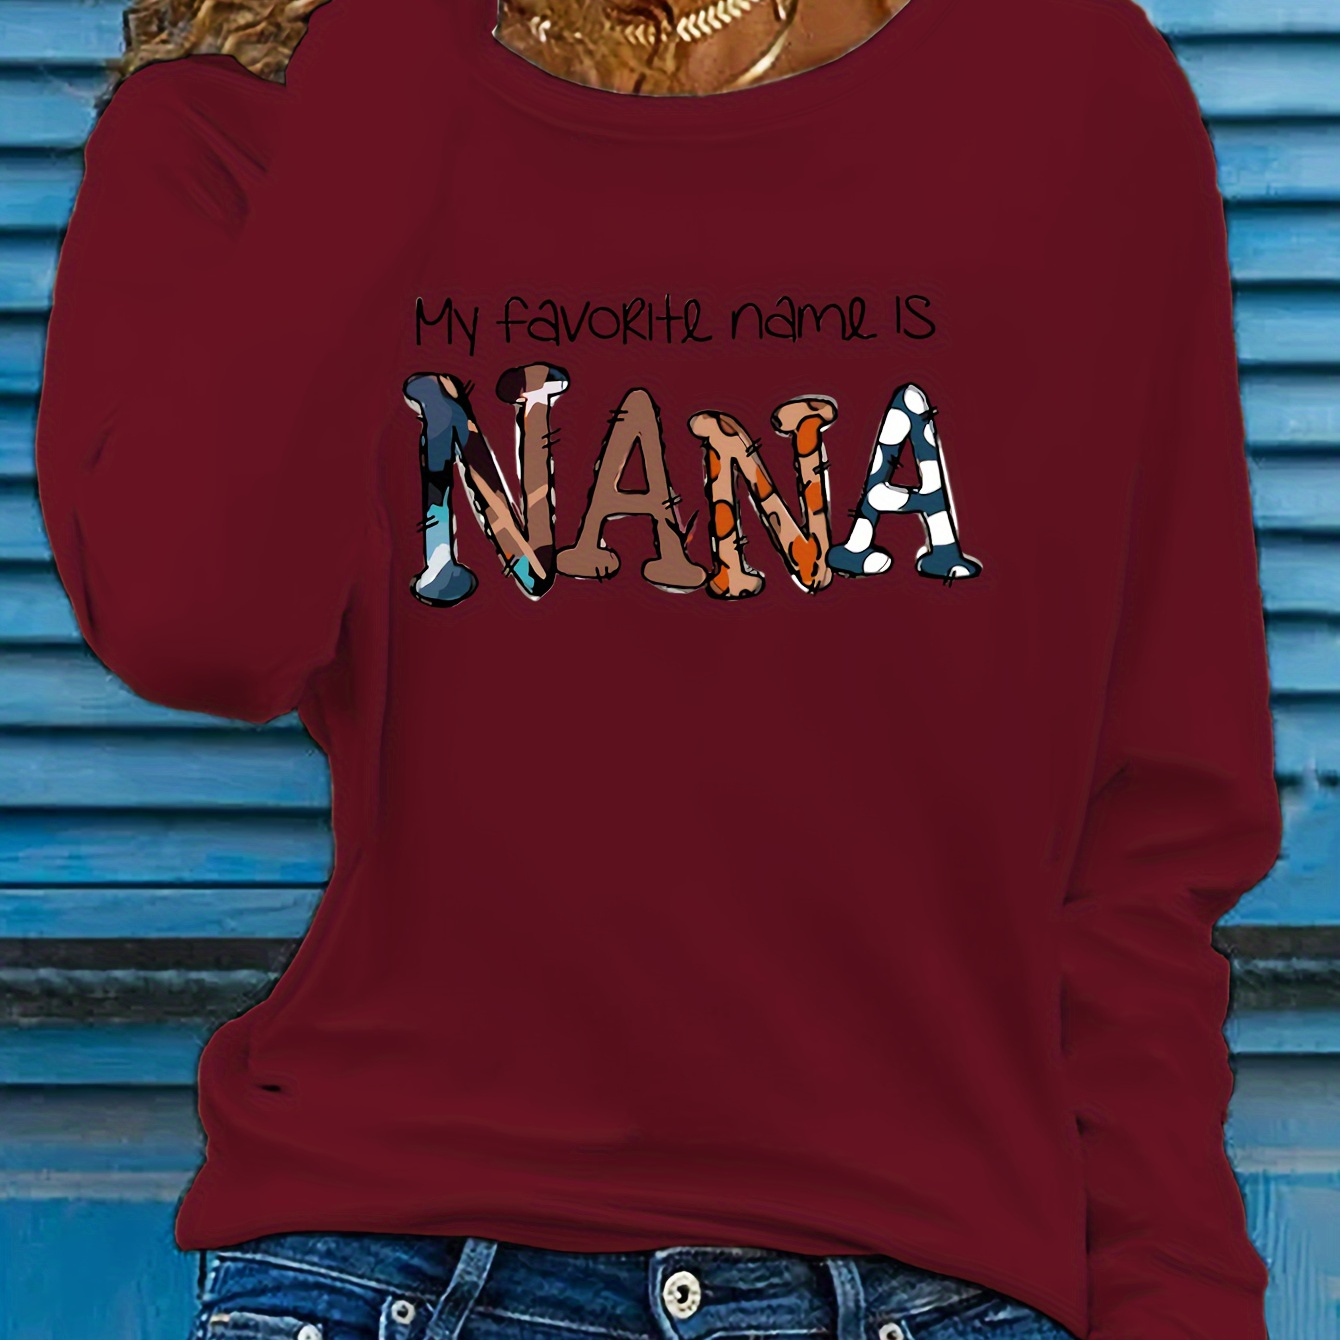 

Nana Print Crew Neck T-shirt, Casual Long Sleeve Top For Spring & Fall, Women's Clothing